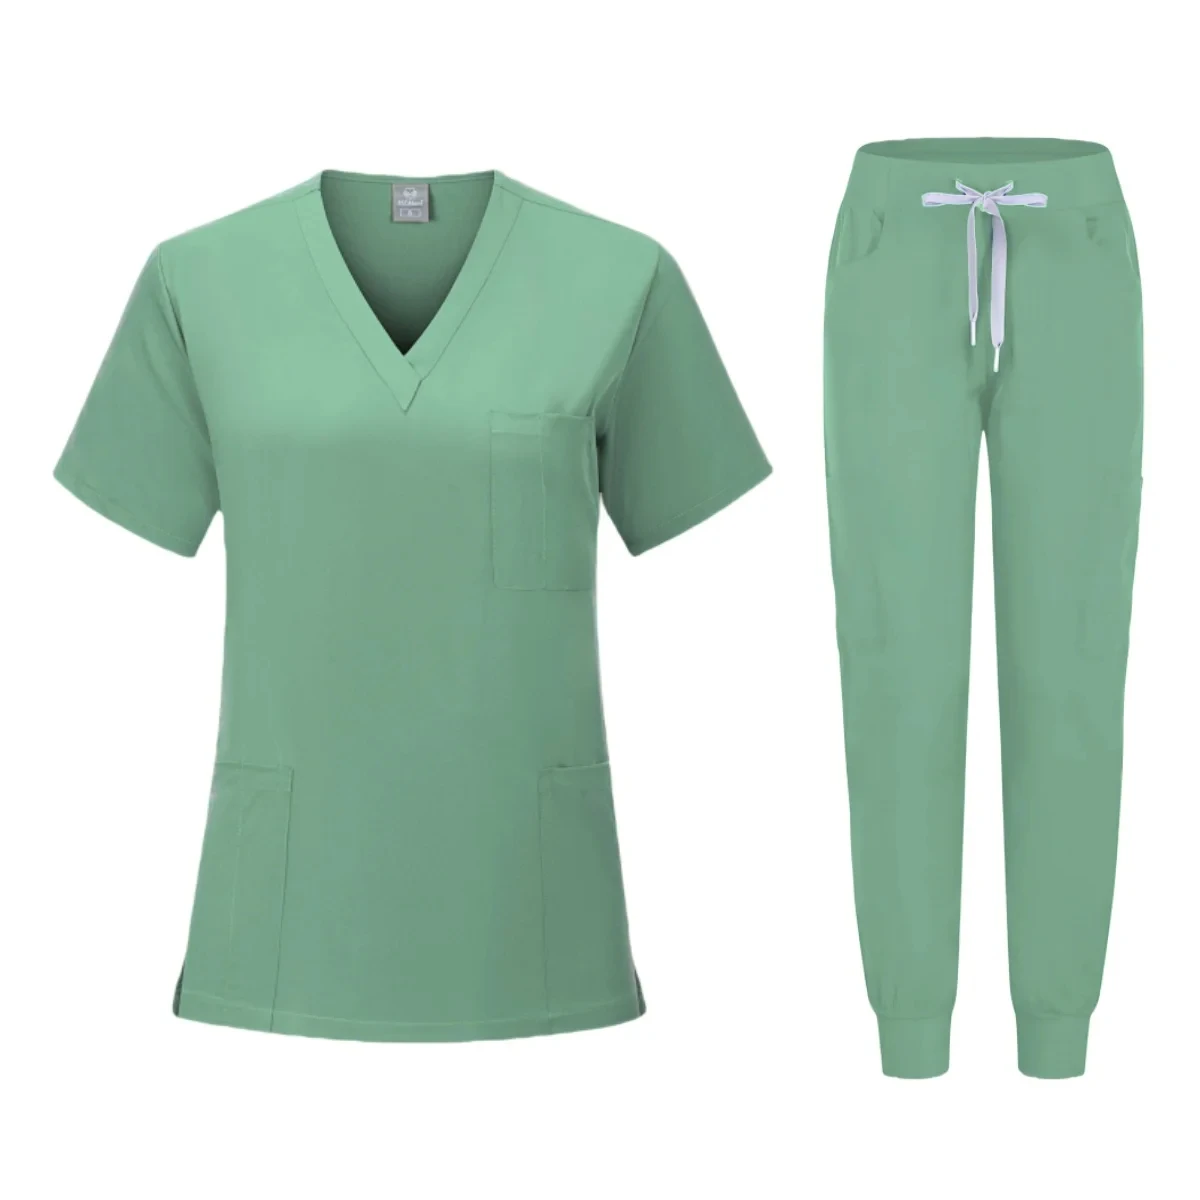 Hot Sale Anti Wrinkle Washable Soft Fabric Nurse Scrubs Hospital Uniform Medical Scrubs Women Jogger Scrubs Sets Pair